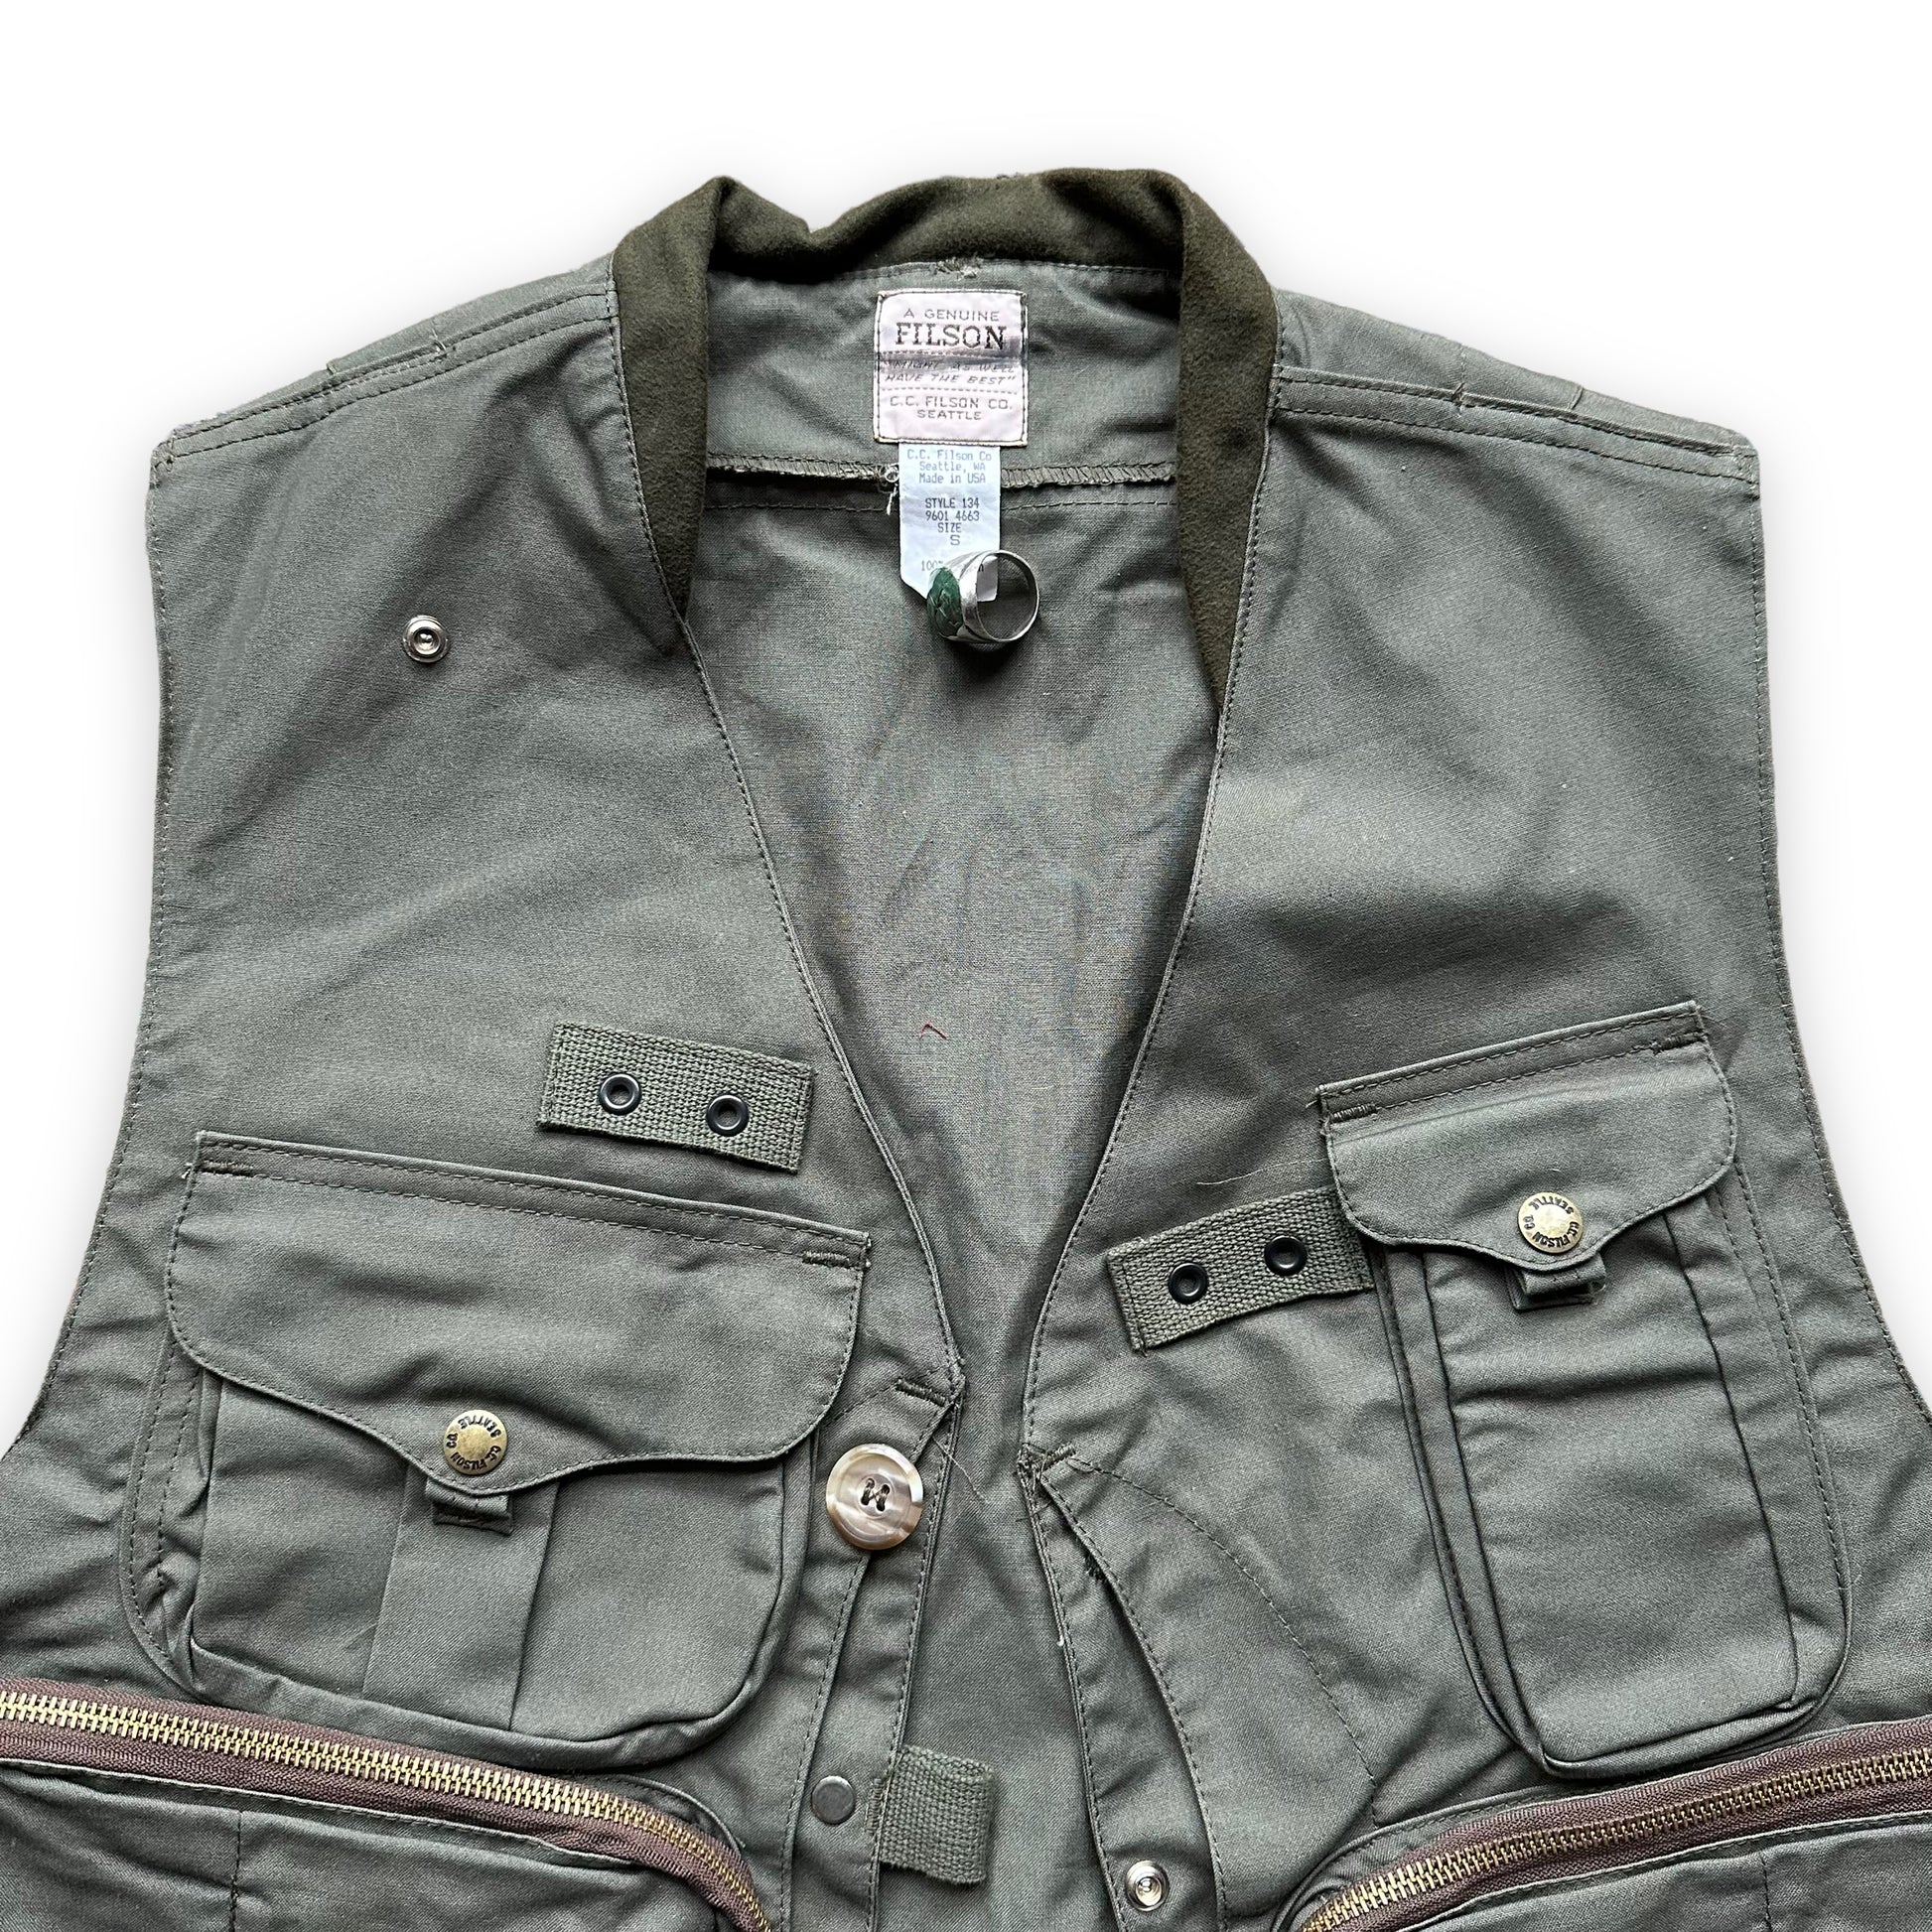 Vintage Filson Fly Fishing Vest Style 134 SZ S  Filson Tin Cloth Vest –  The Barn Owl Vintage Goods